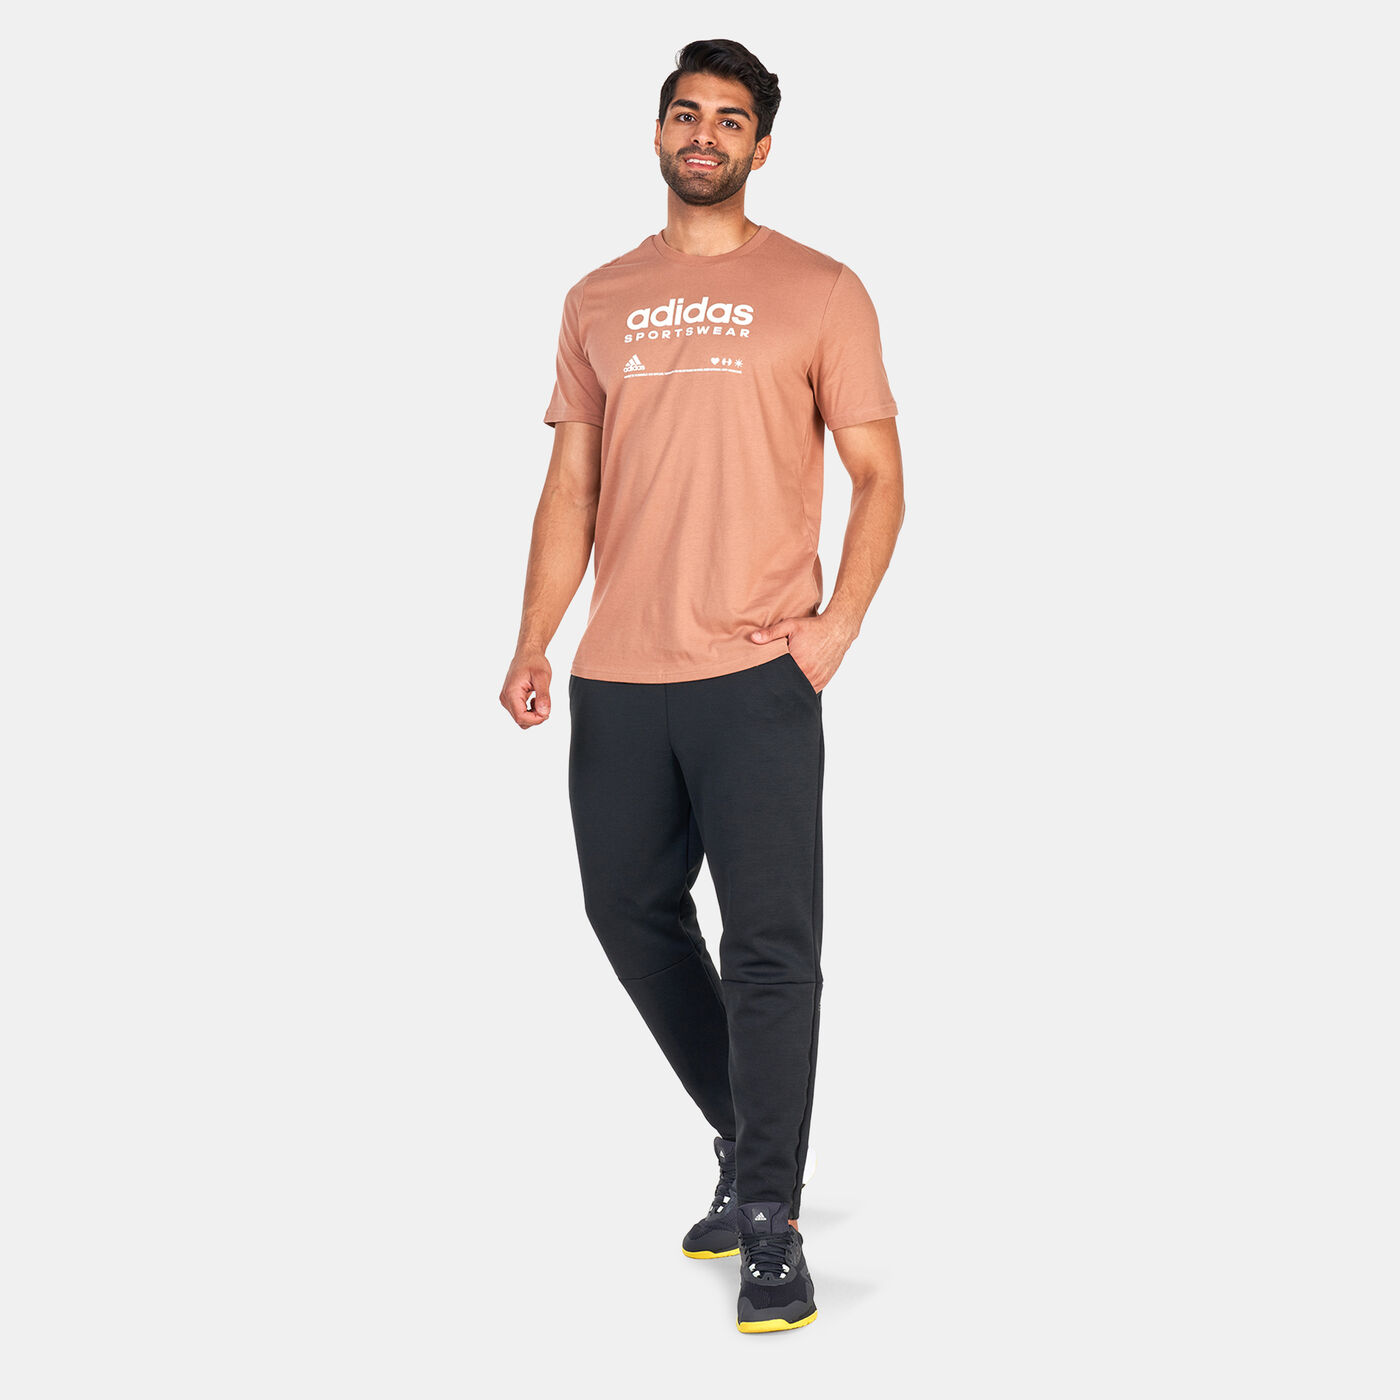 Men's Lounge Graphic T-Shirt